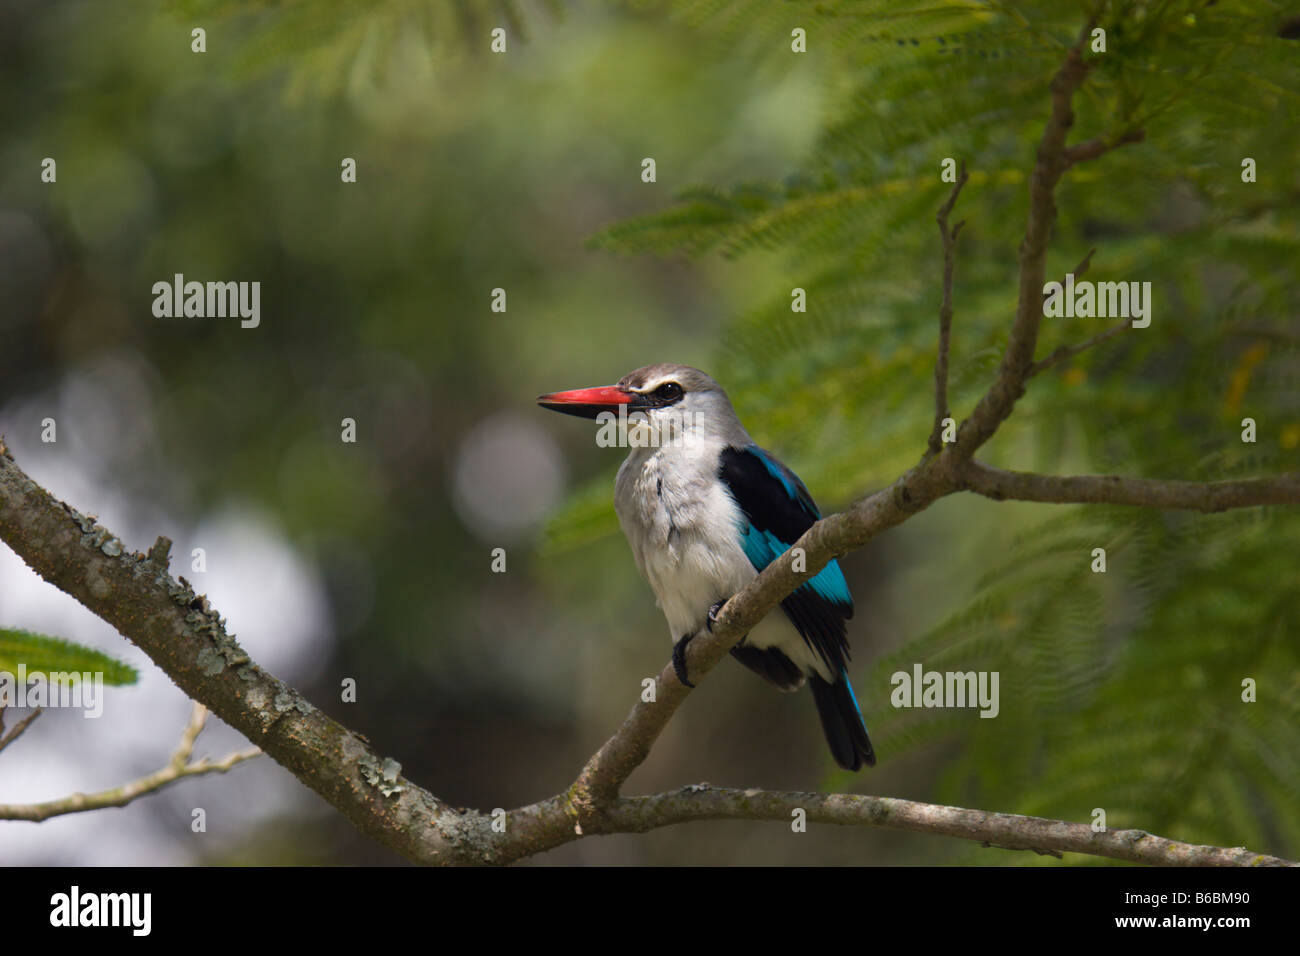 Kingfisher Kingfisher Afrique Ouganda d'oiseaux forestiers Banque D'Images